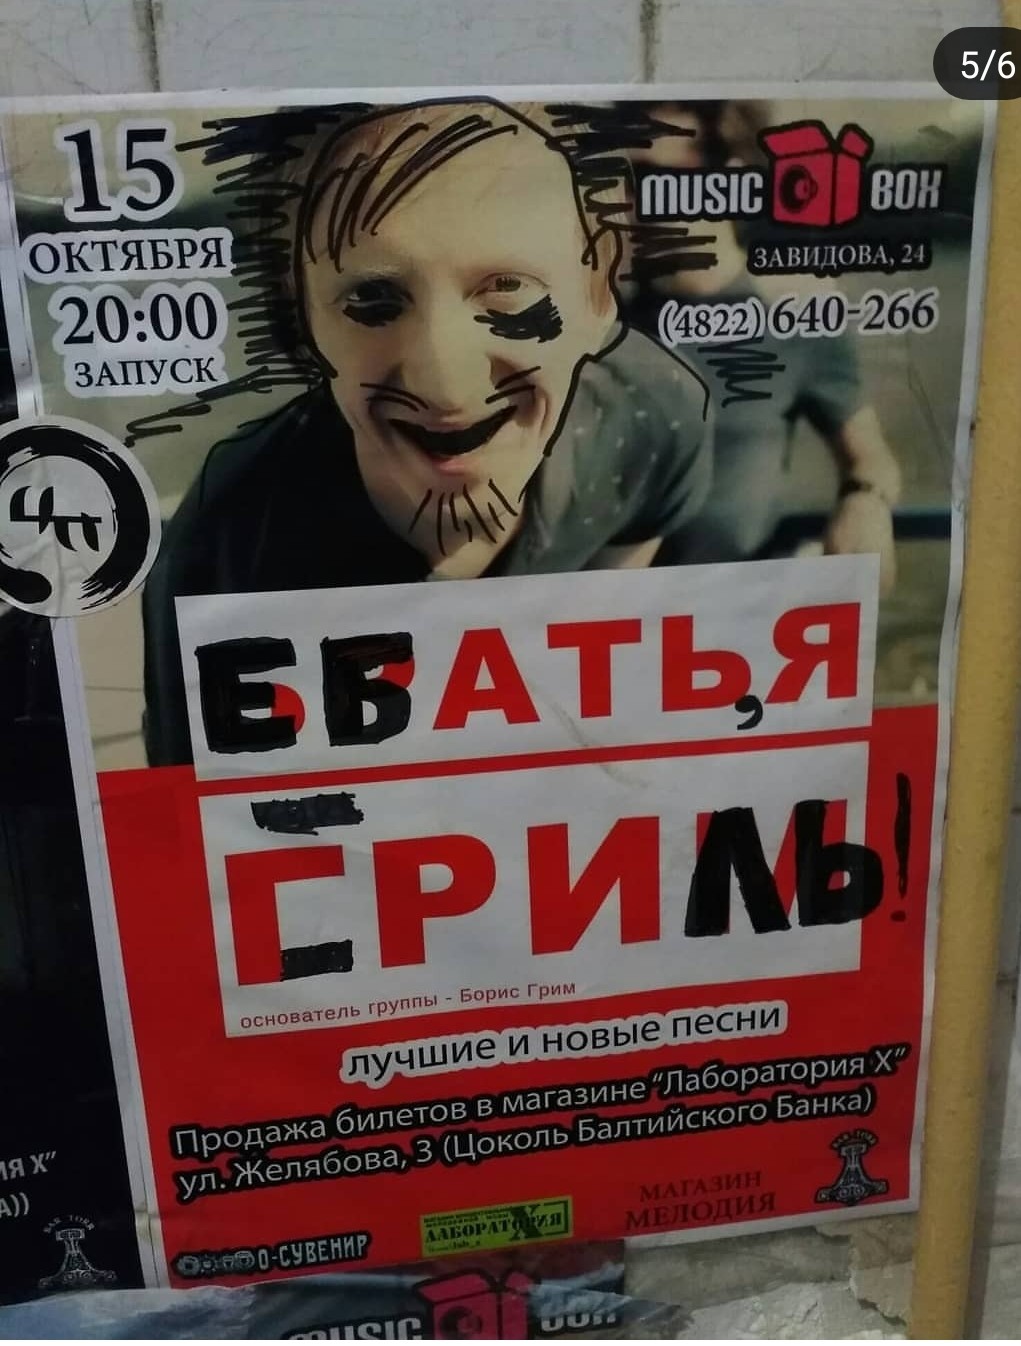 Cultural life of Tver. - Poster, Vandalism, Hooliganism, Longpost